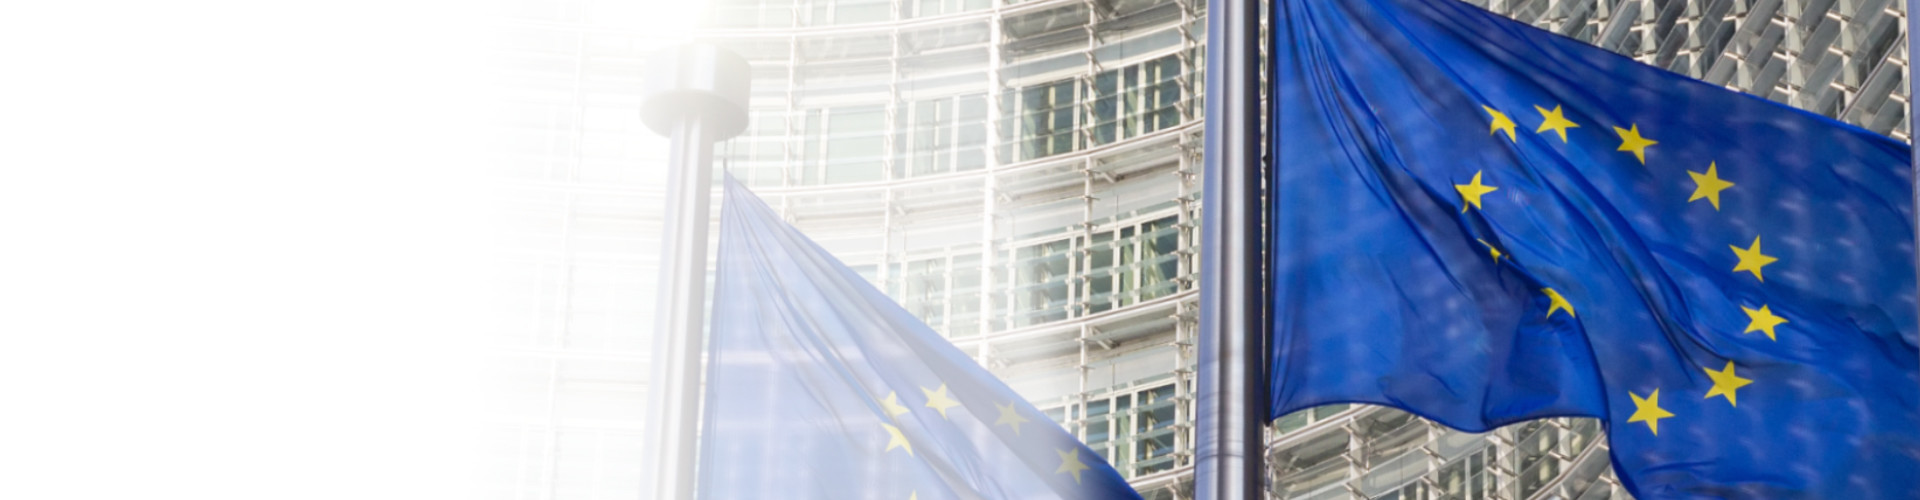 EU Flagge vor dem Kommissionsgebäude © VanderWolf Images, stock.adobe.com